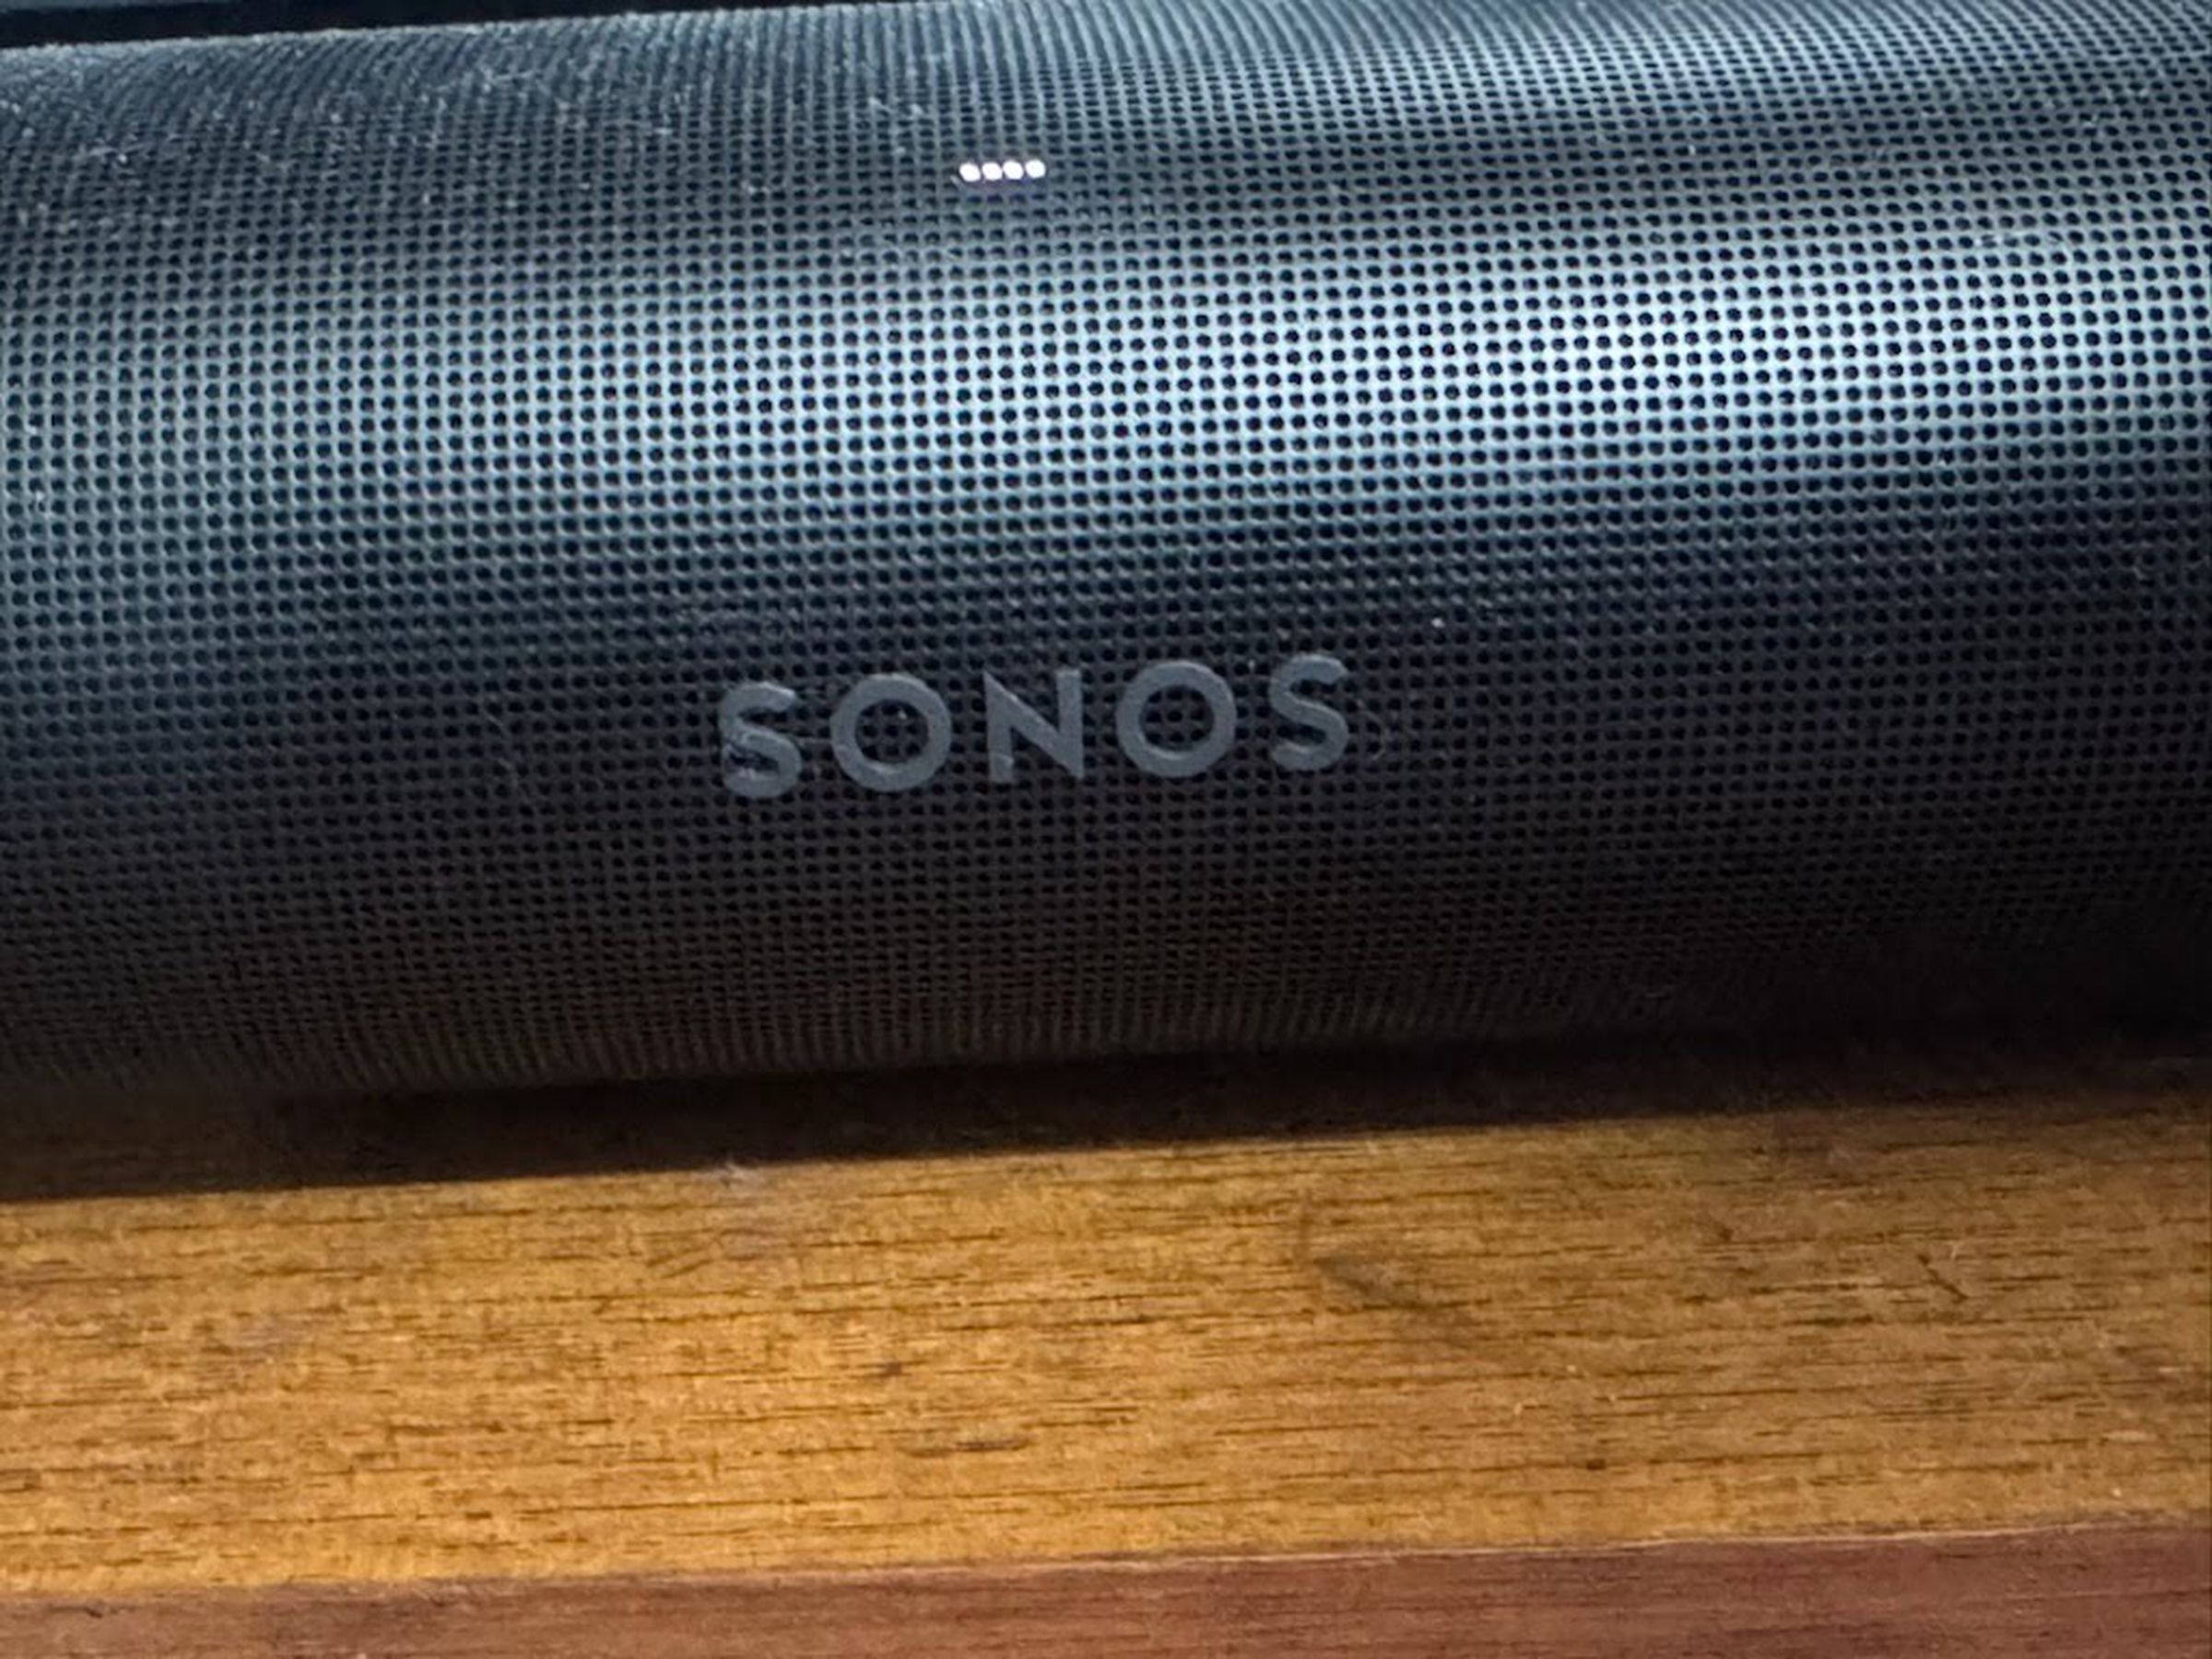 A photo of the upcoming Sonos soundbar, codename Lasso.